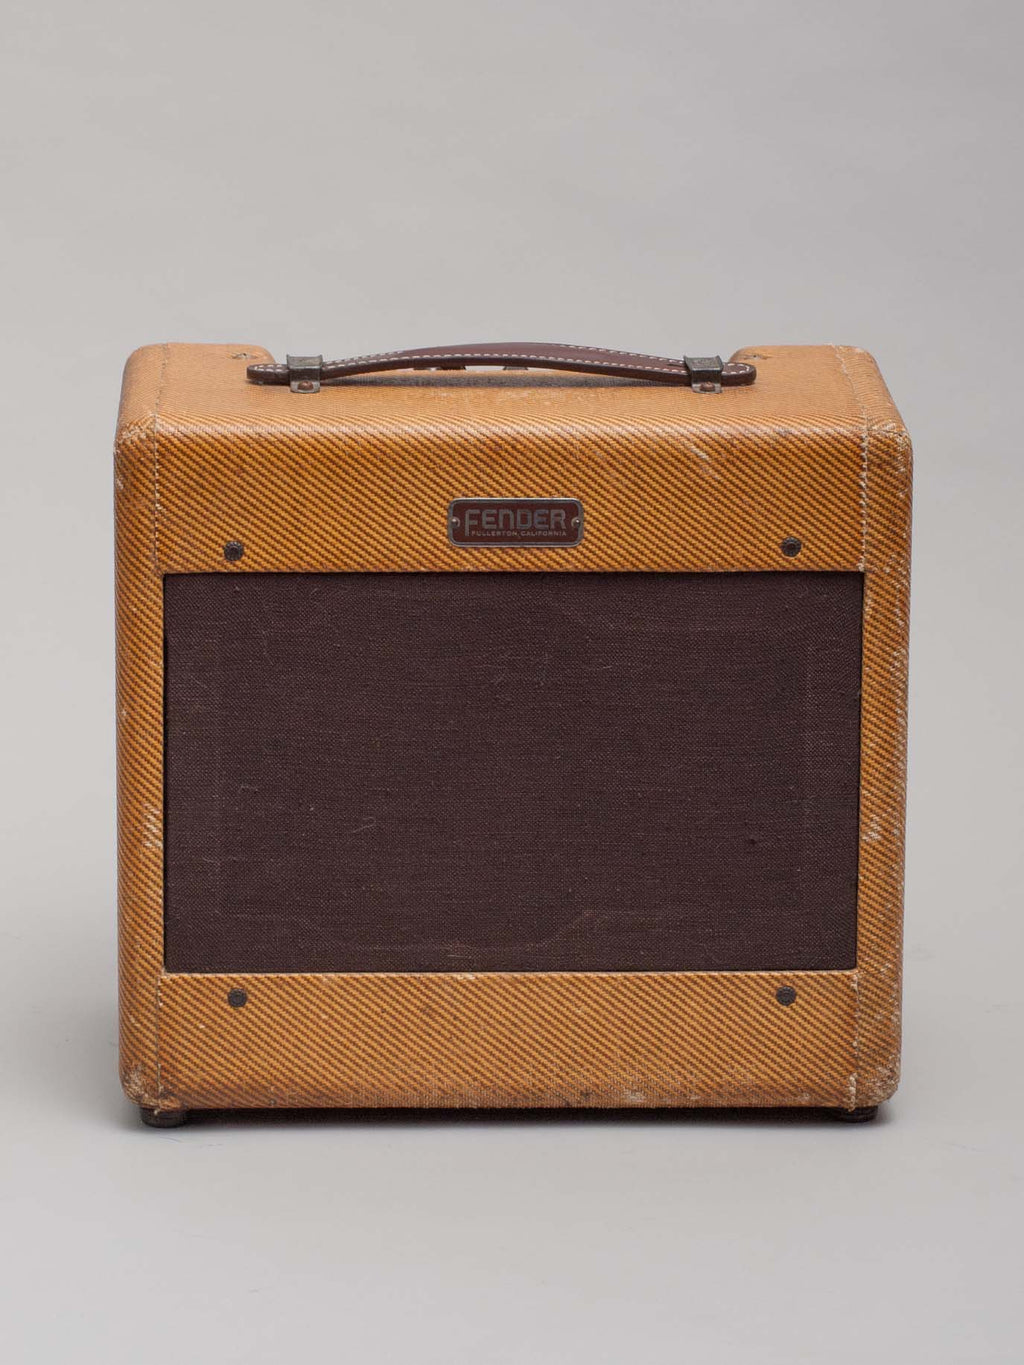 1954 Fender Princeton